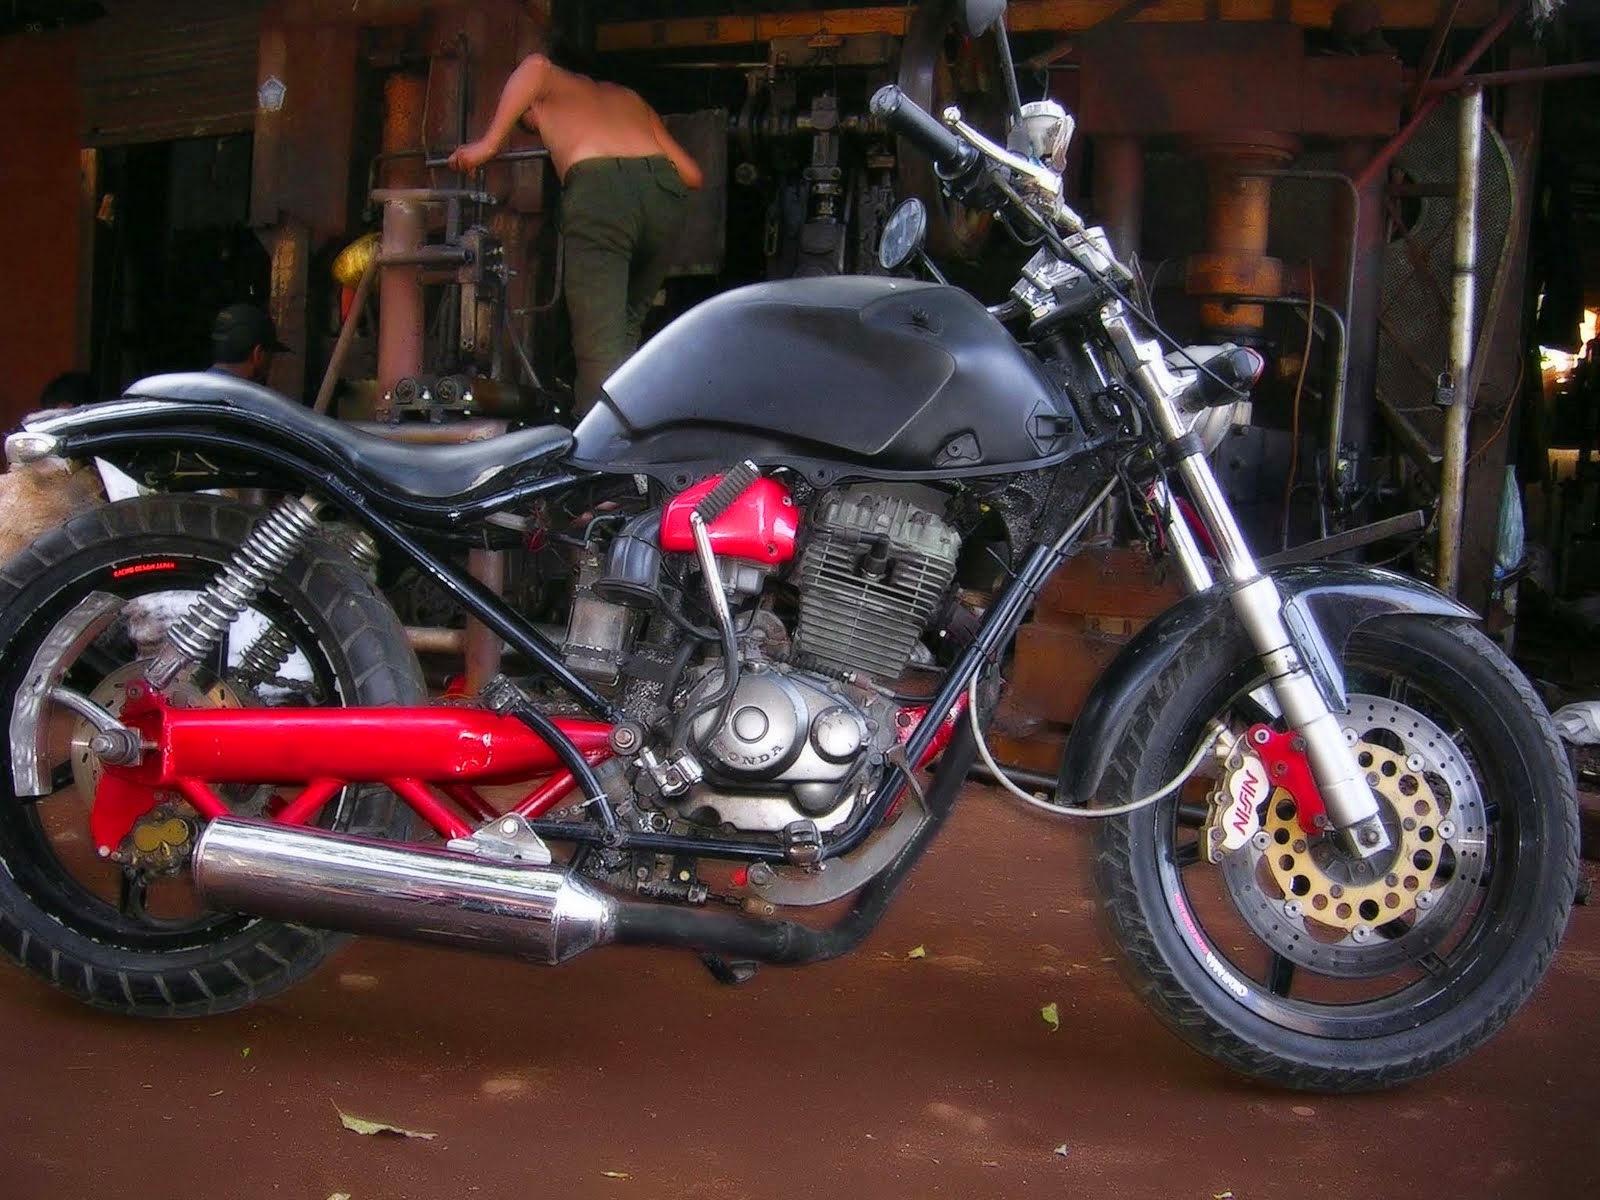 Desain Modifikasi Motor Tiger Menjadi Harley Davidson Otomotif